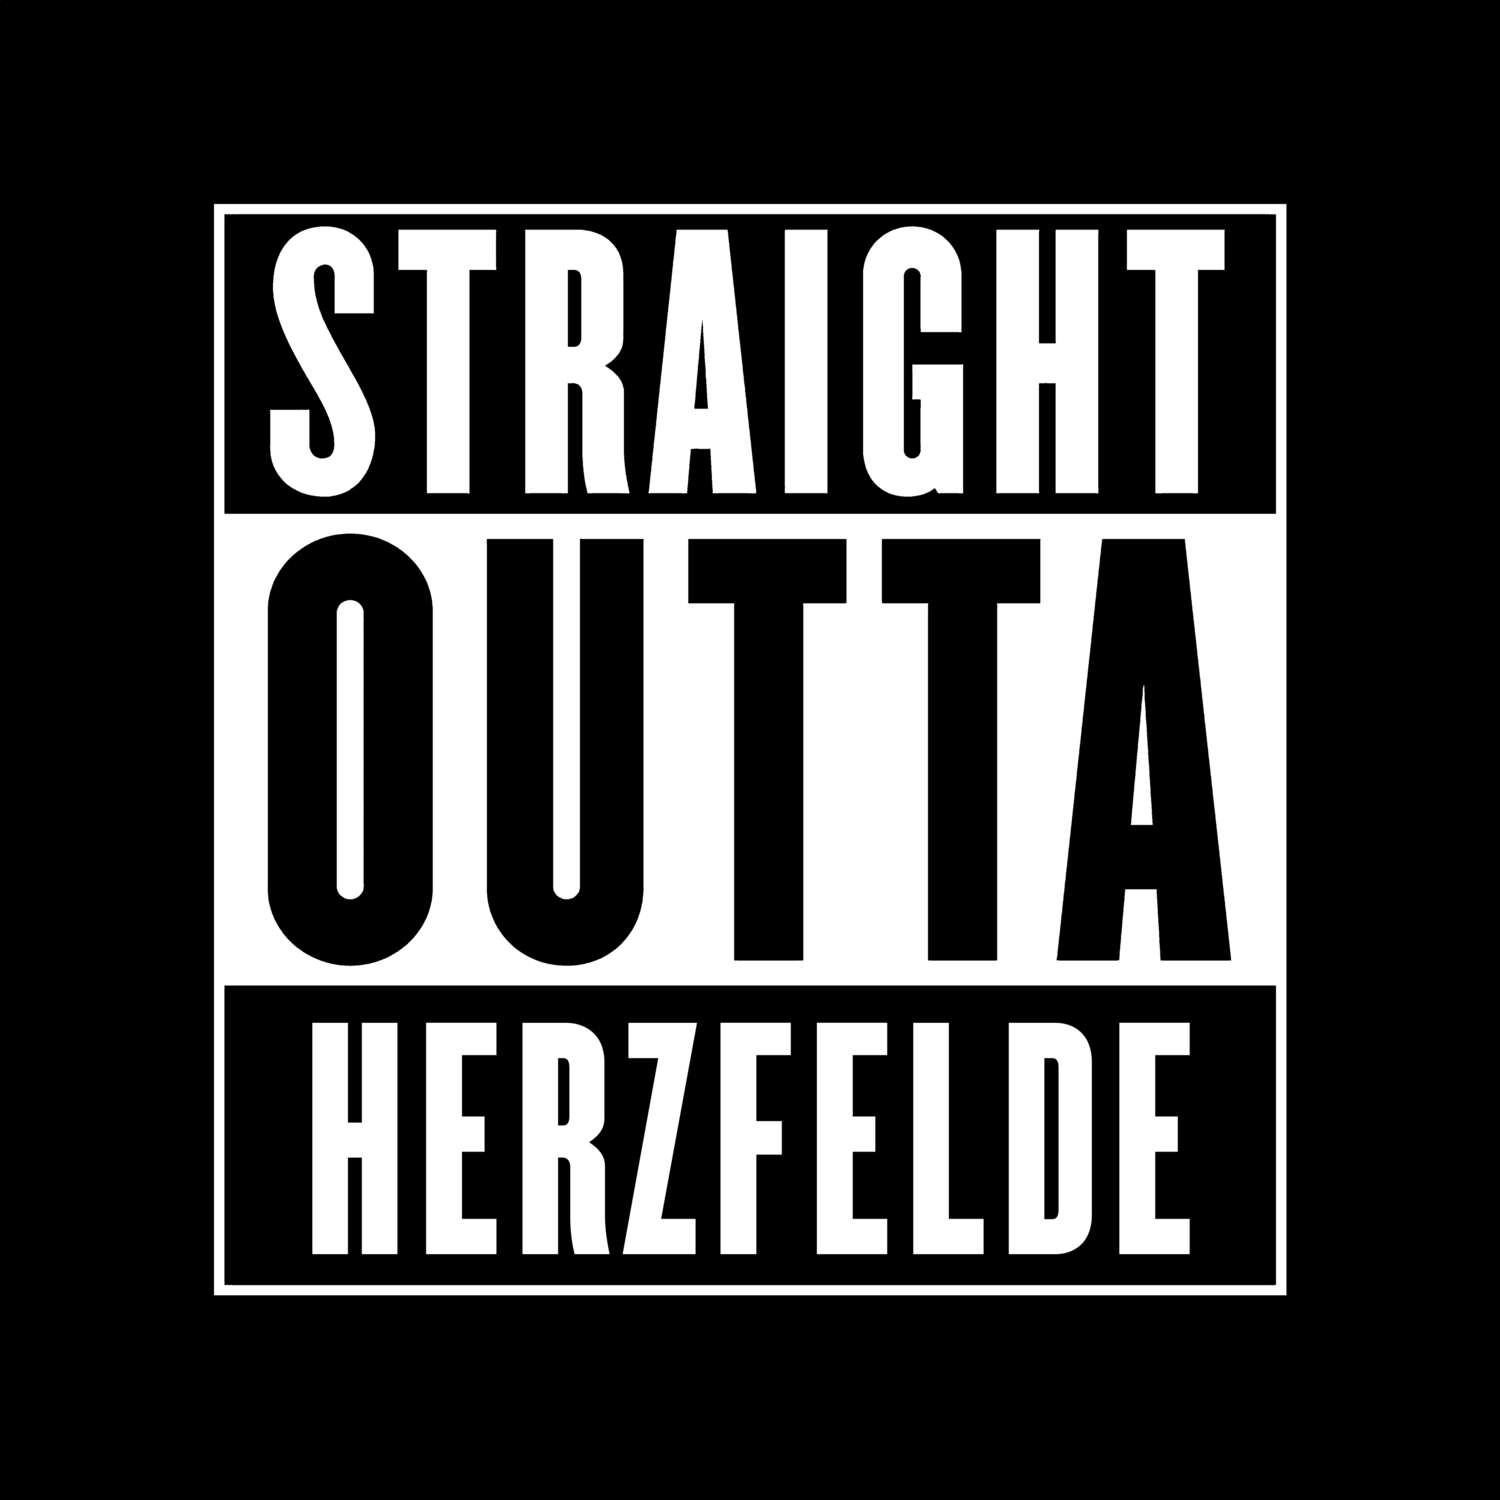 Herzfelde T-Shirt »Straight Outta«